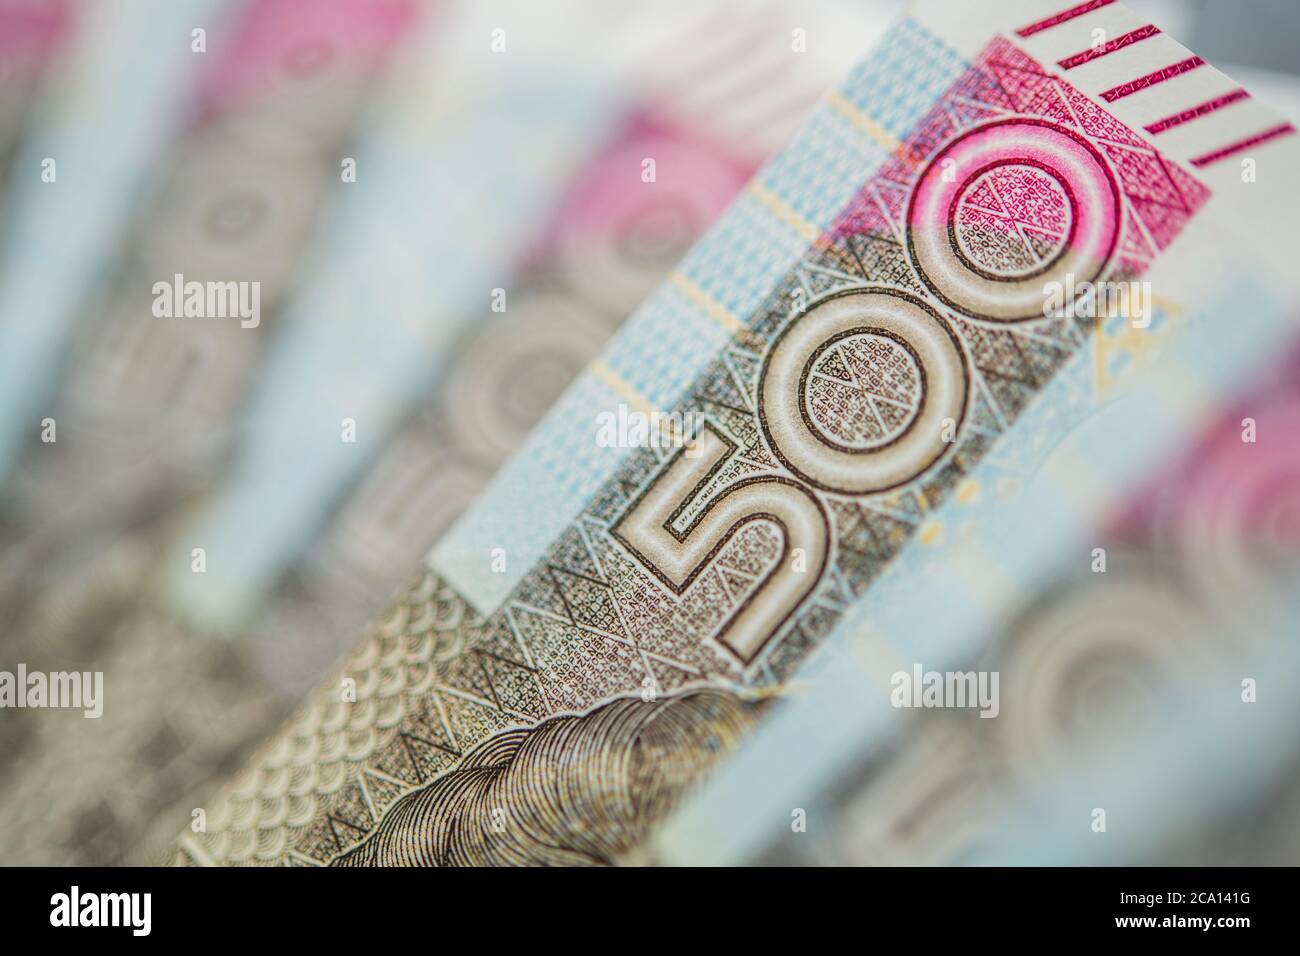 Polish Currency. Five Hundred Polish Zlotych Banknotes Macro Close Up. Republic of Poland. Stock Photo